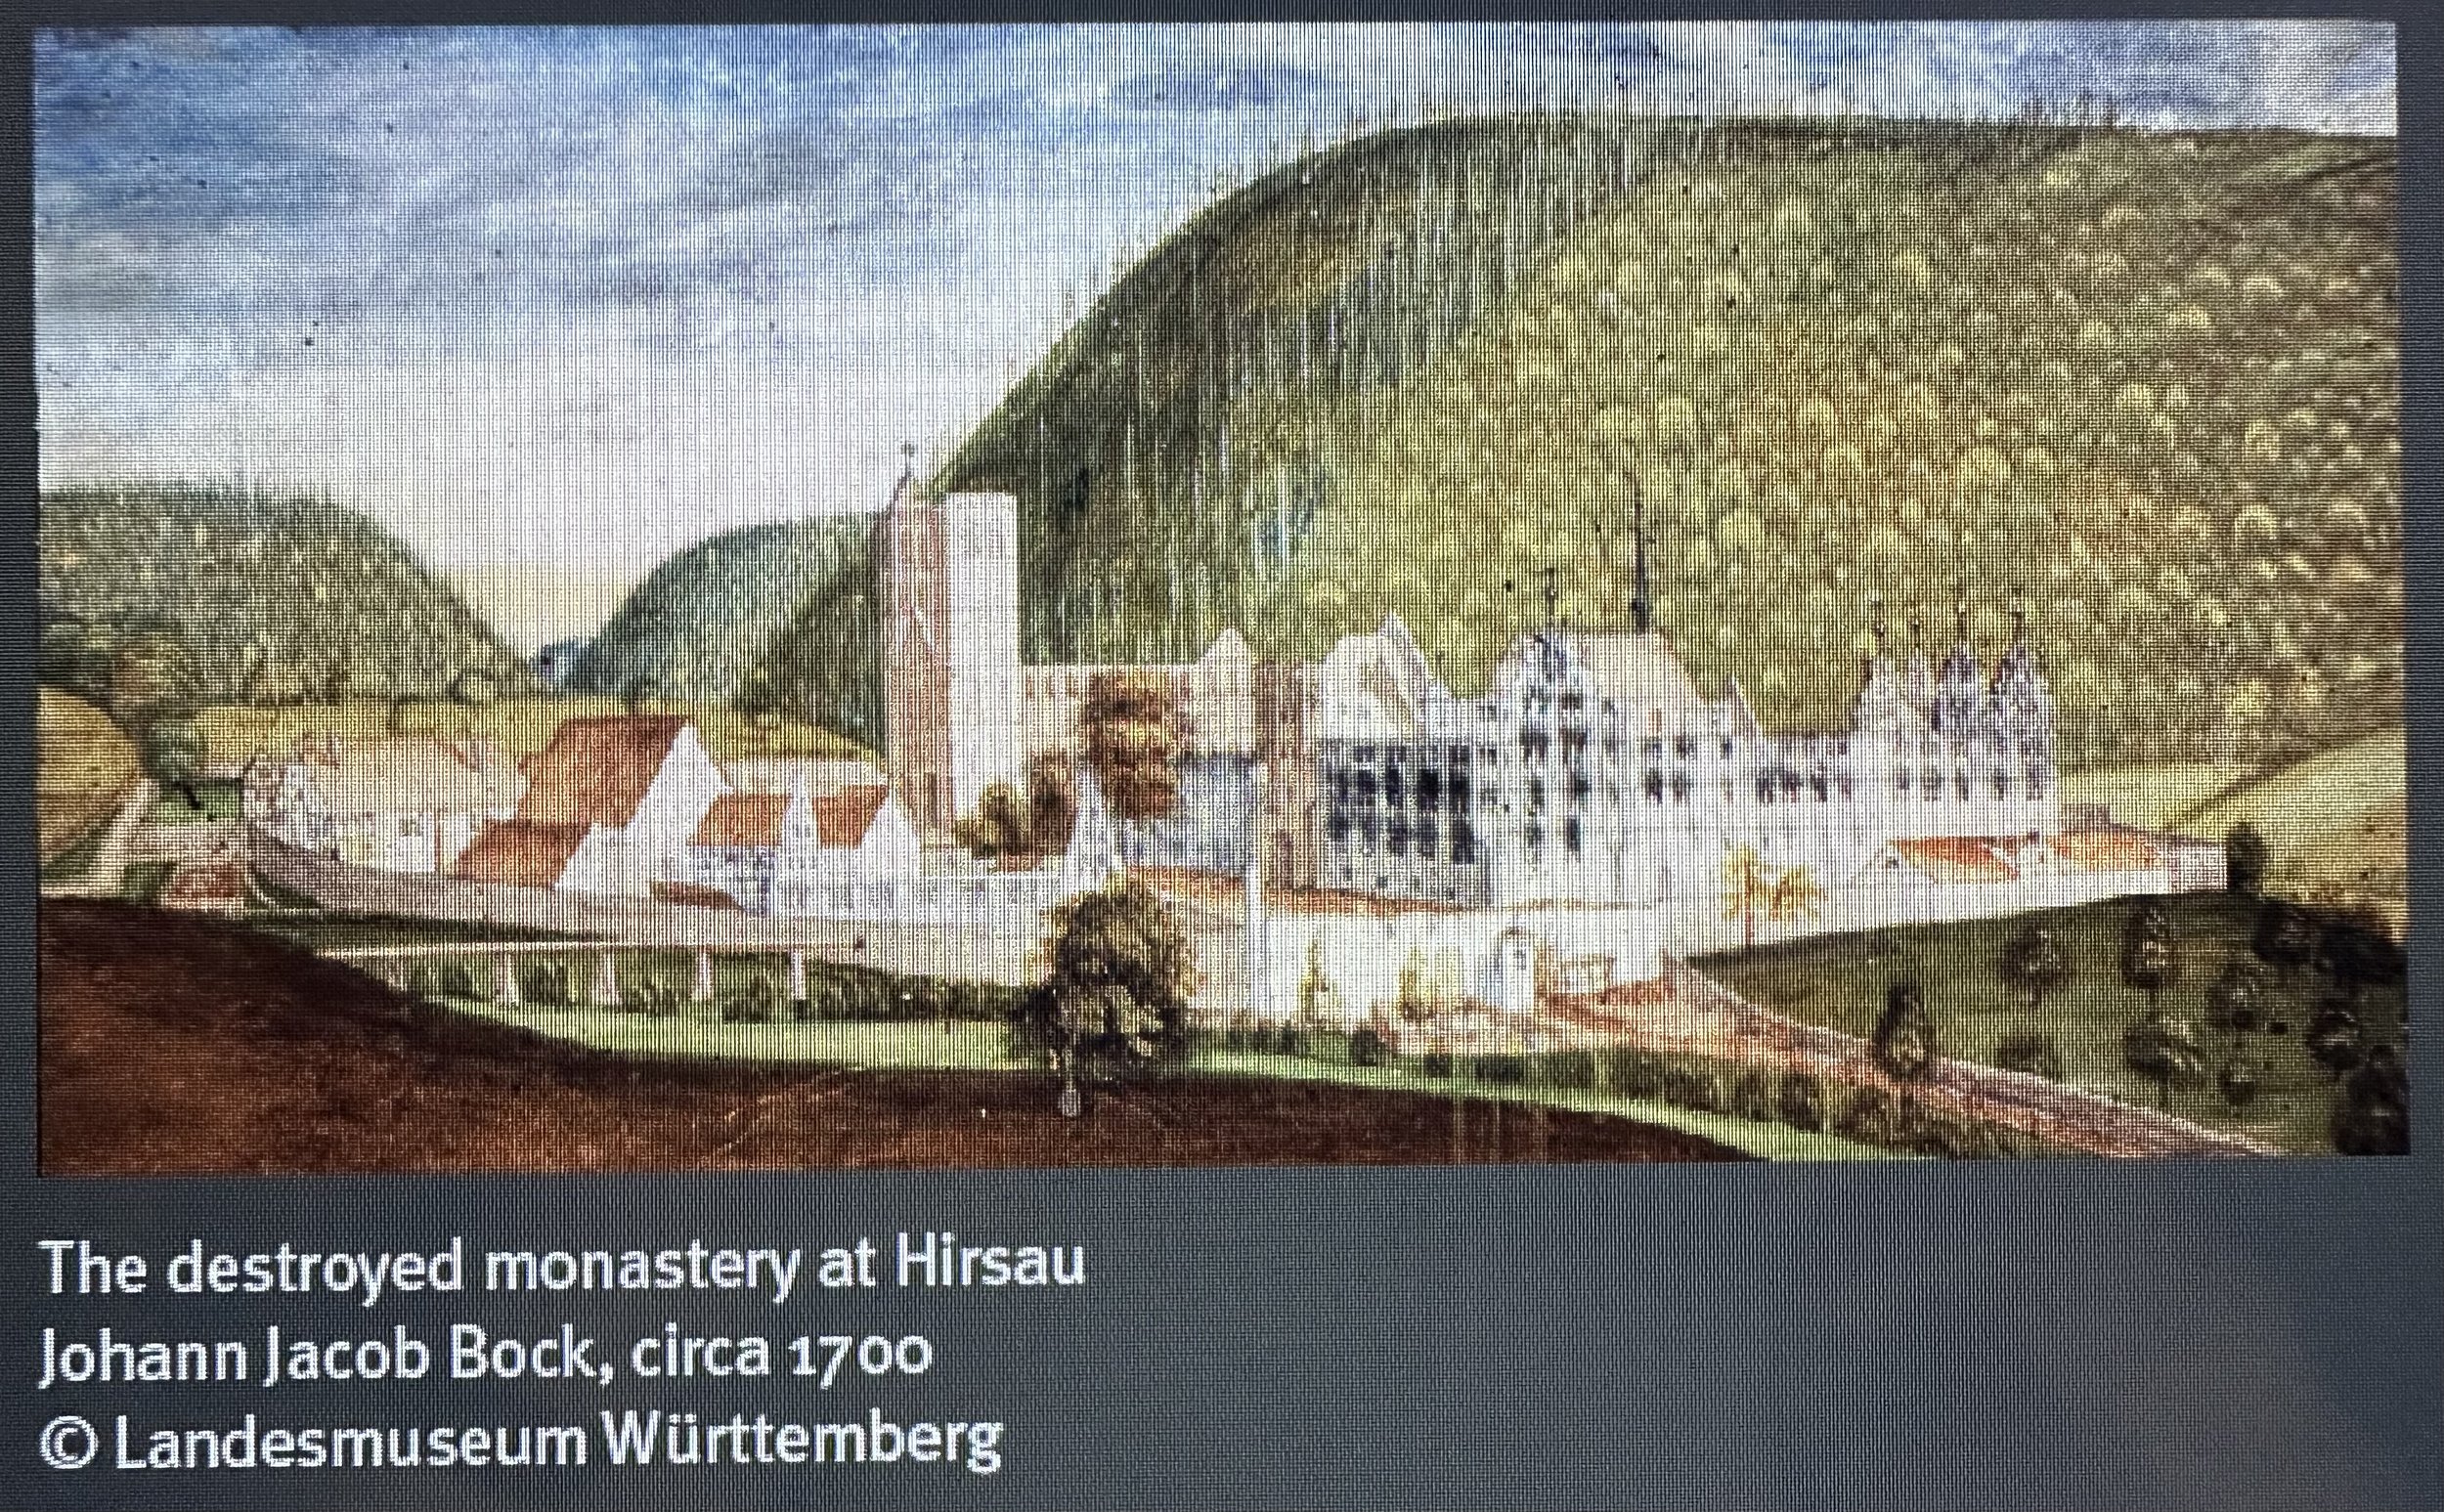 1700 The Destroyed Monastery at Hirsau by Johann Jacob Bock Landesmuseum Wurttemberg.jpeg